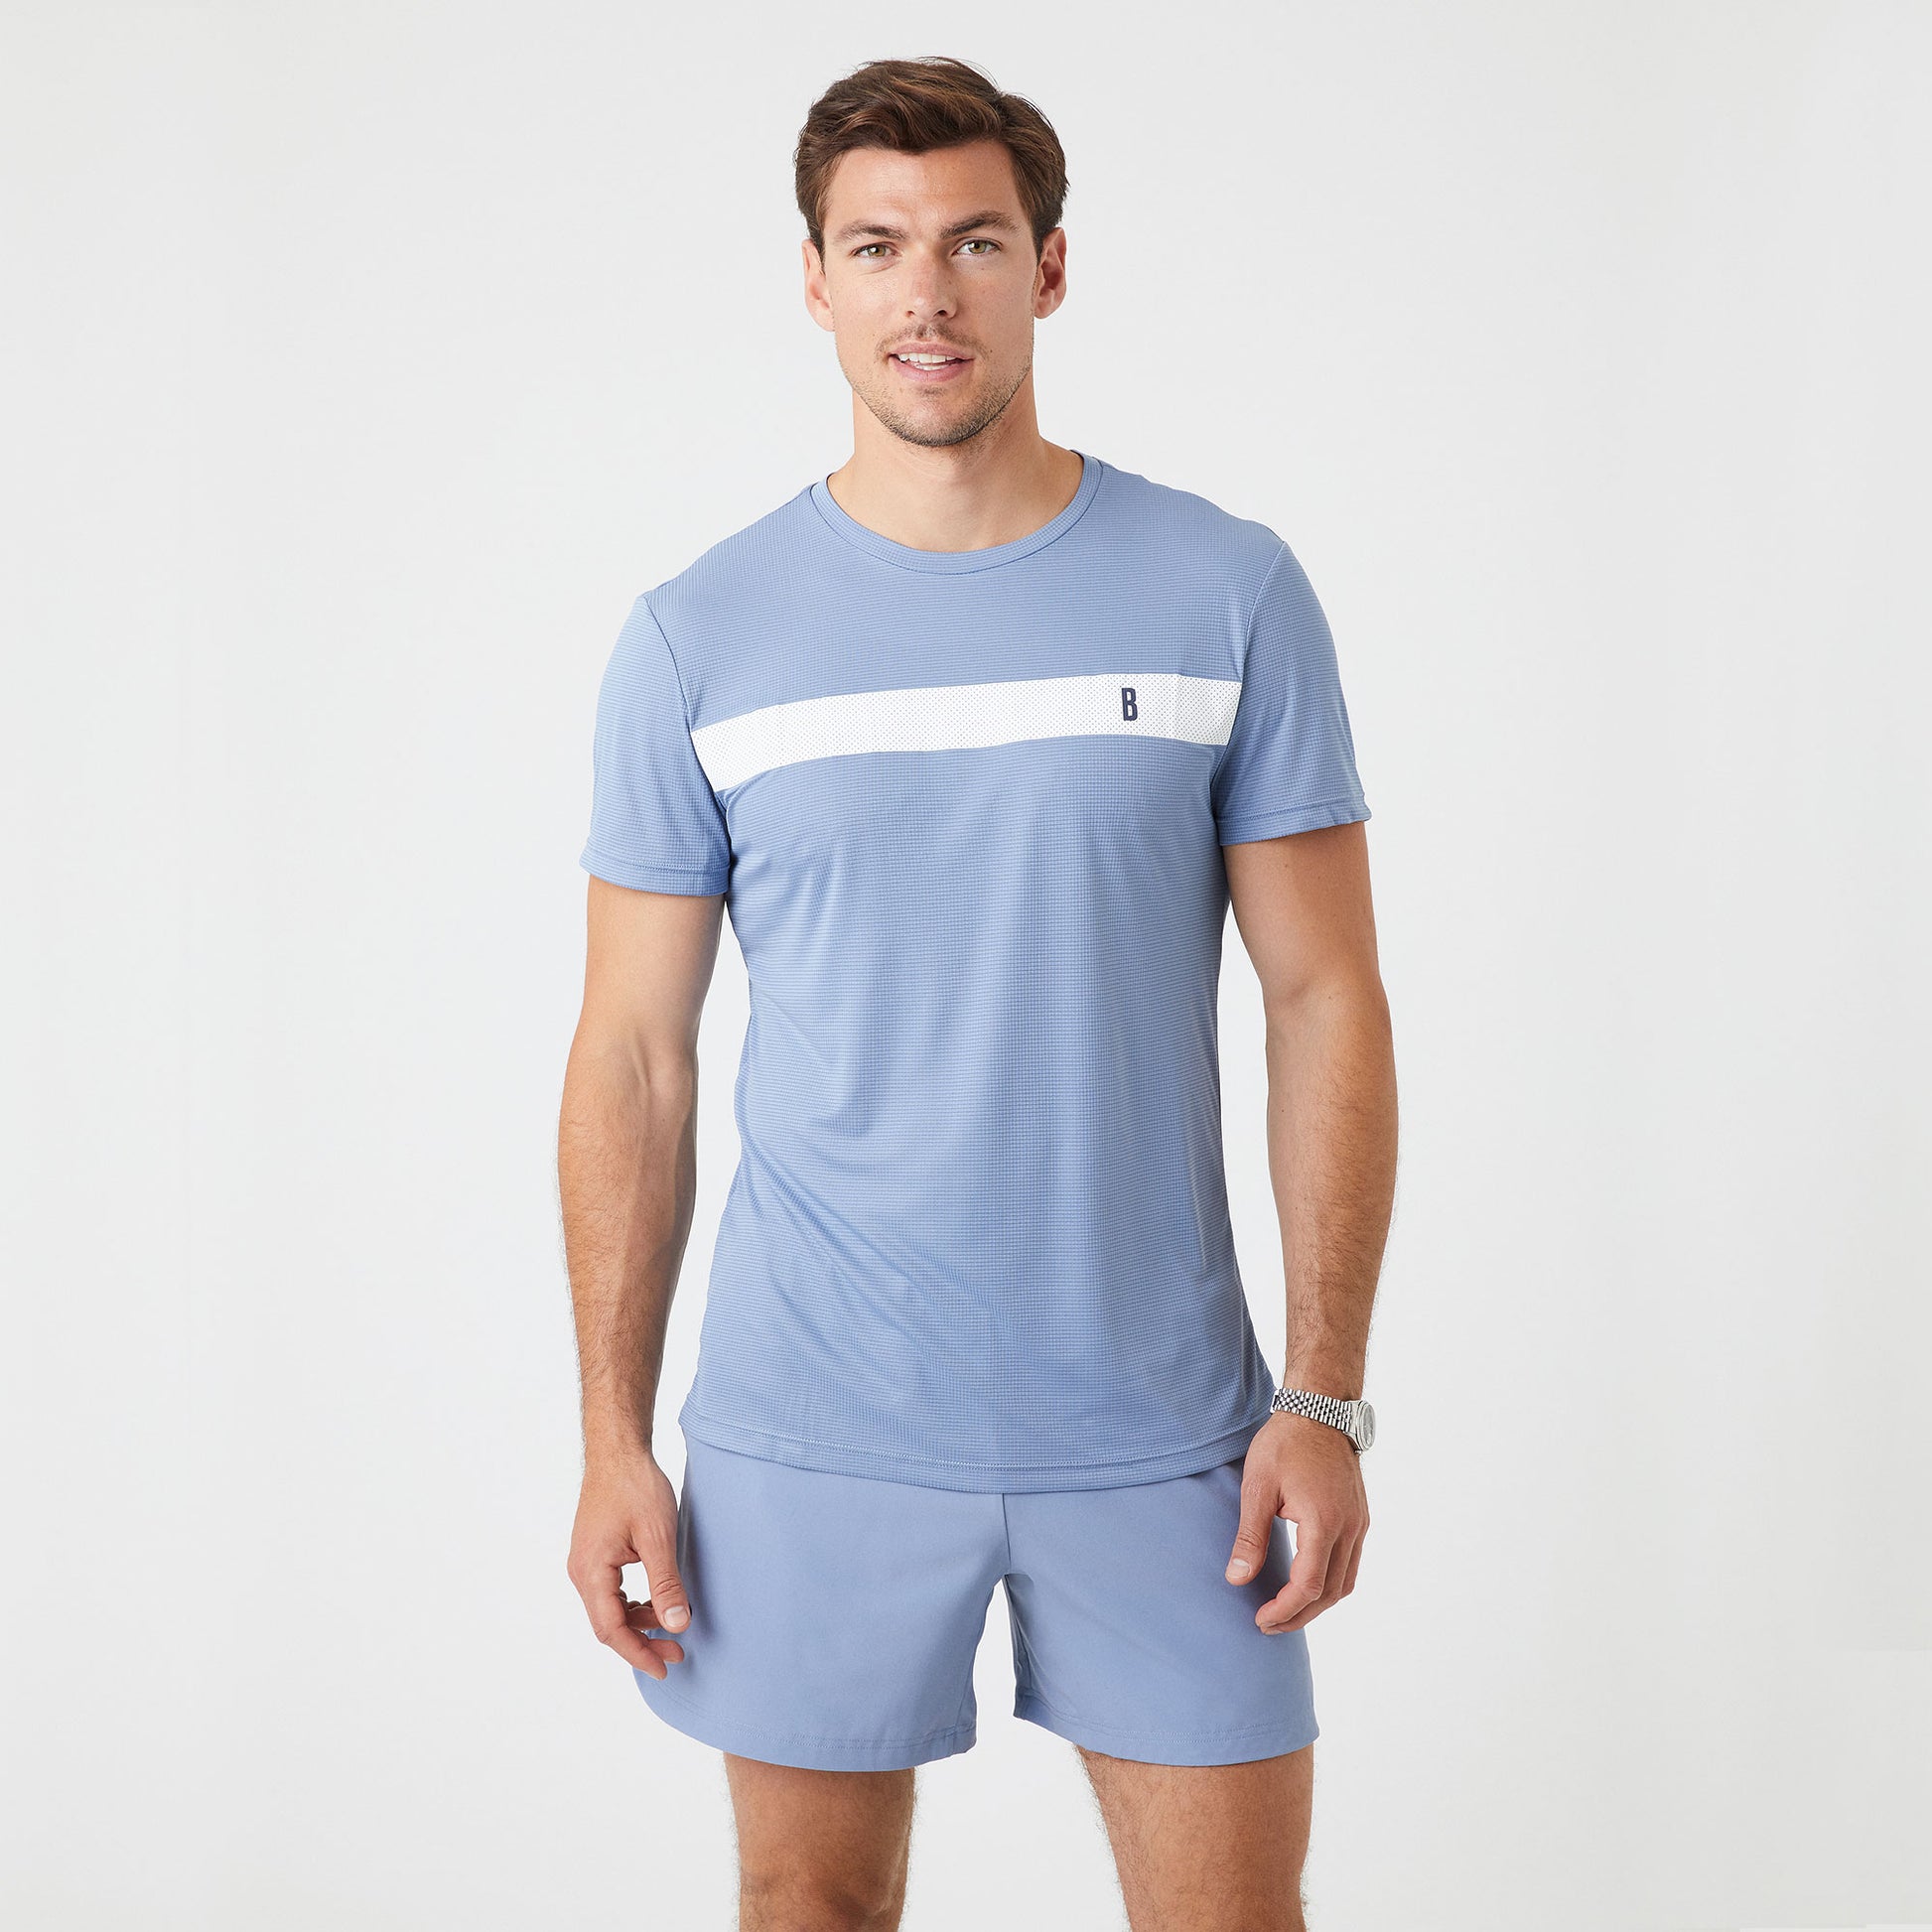 Björn Borg Ace Men's Light Tennis Shirt Blue (1)